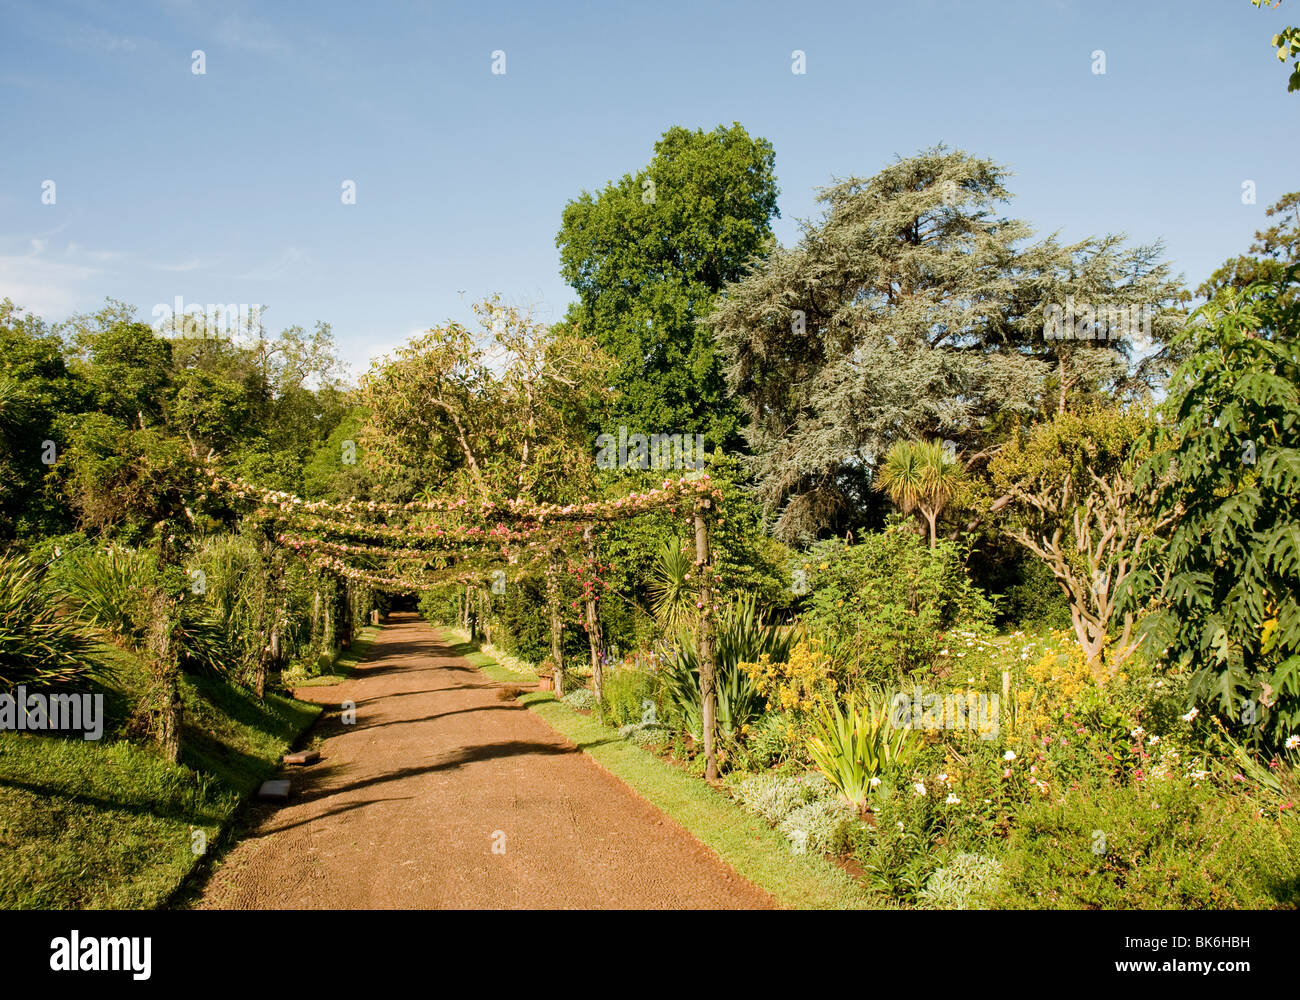 The landscaped gardens of the Quinta do Palheiro Ferreiro estate, on the island of Madeira. Stock Photo